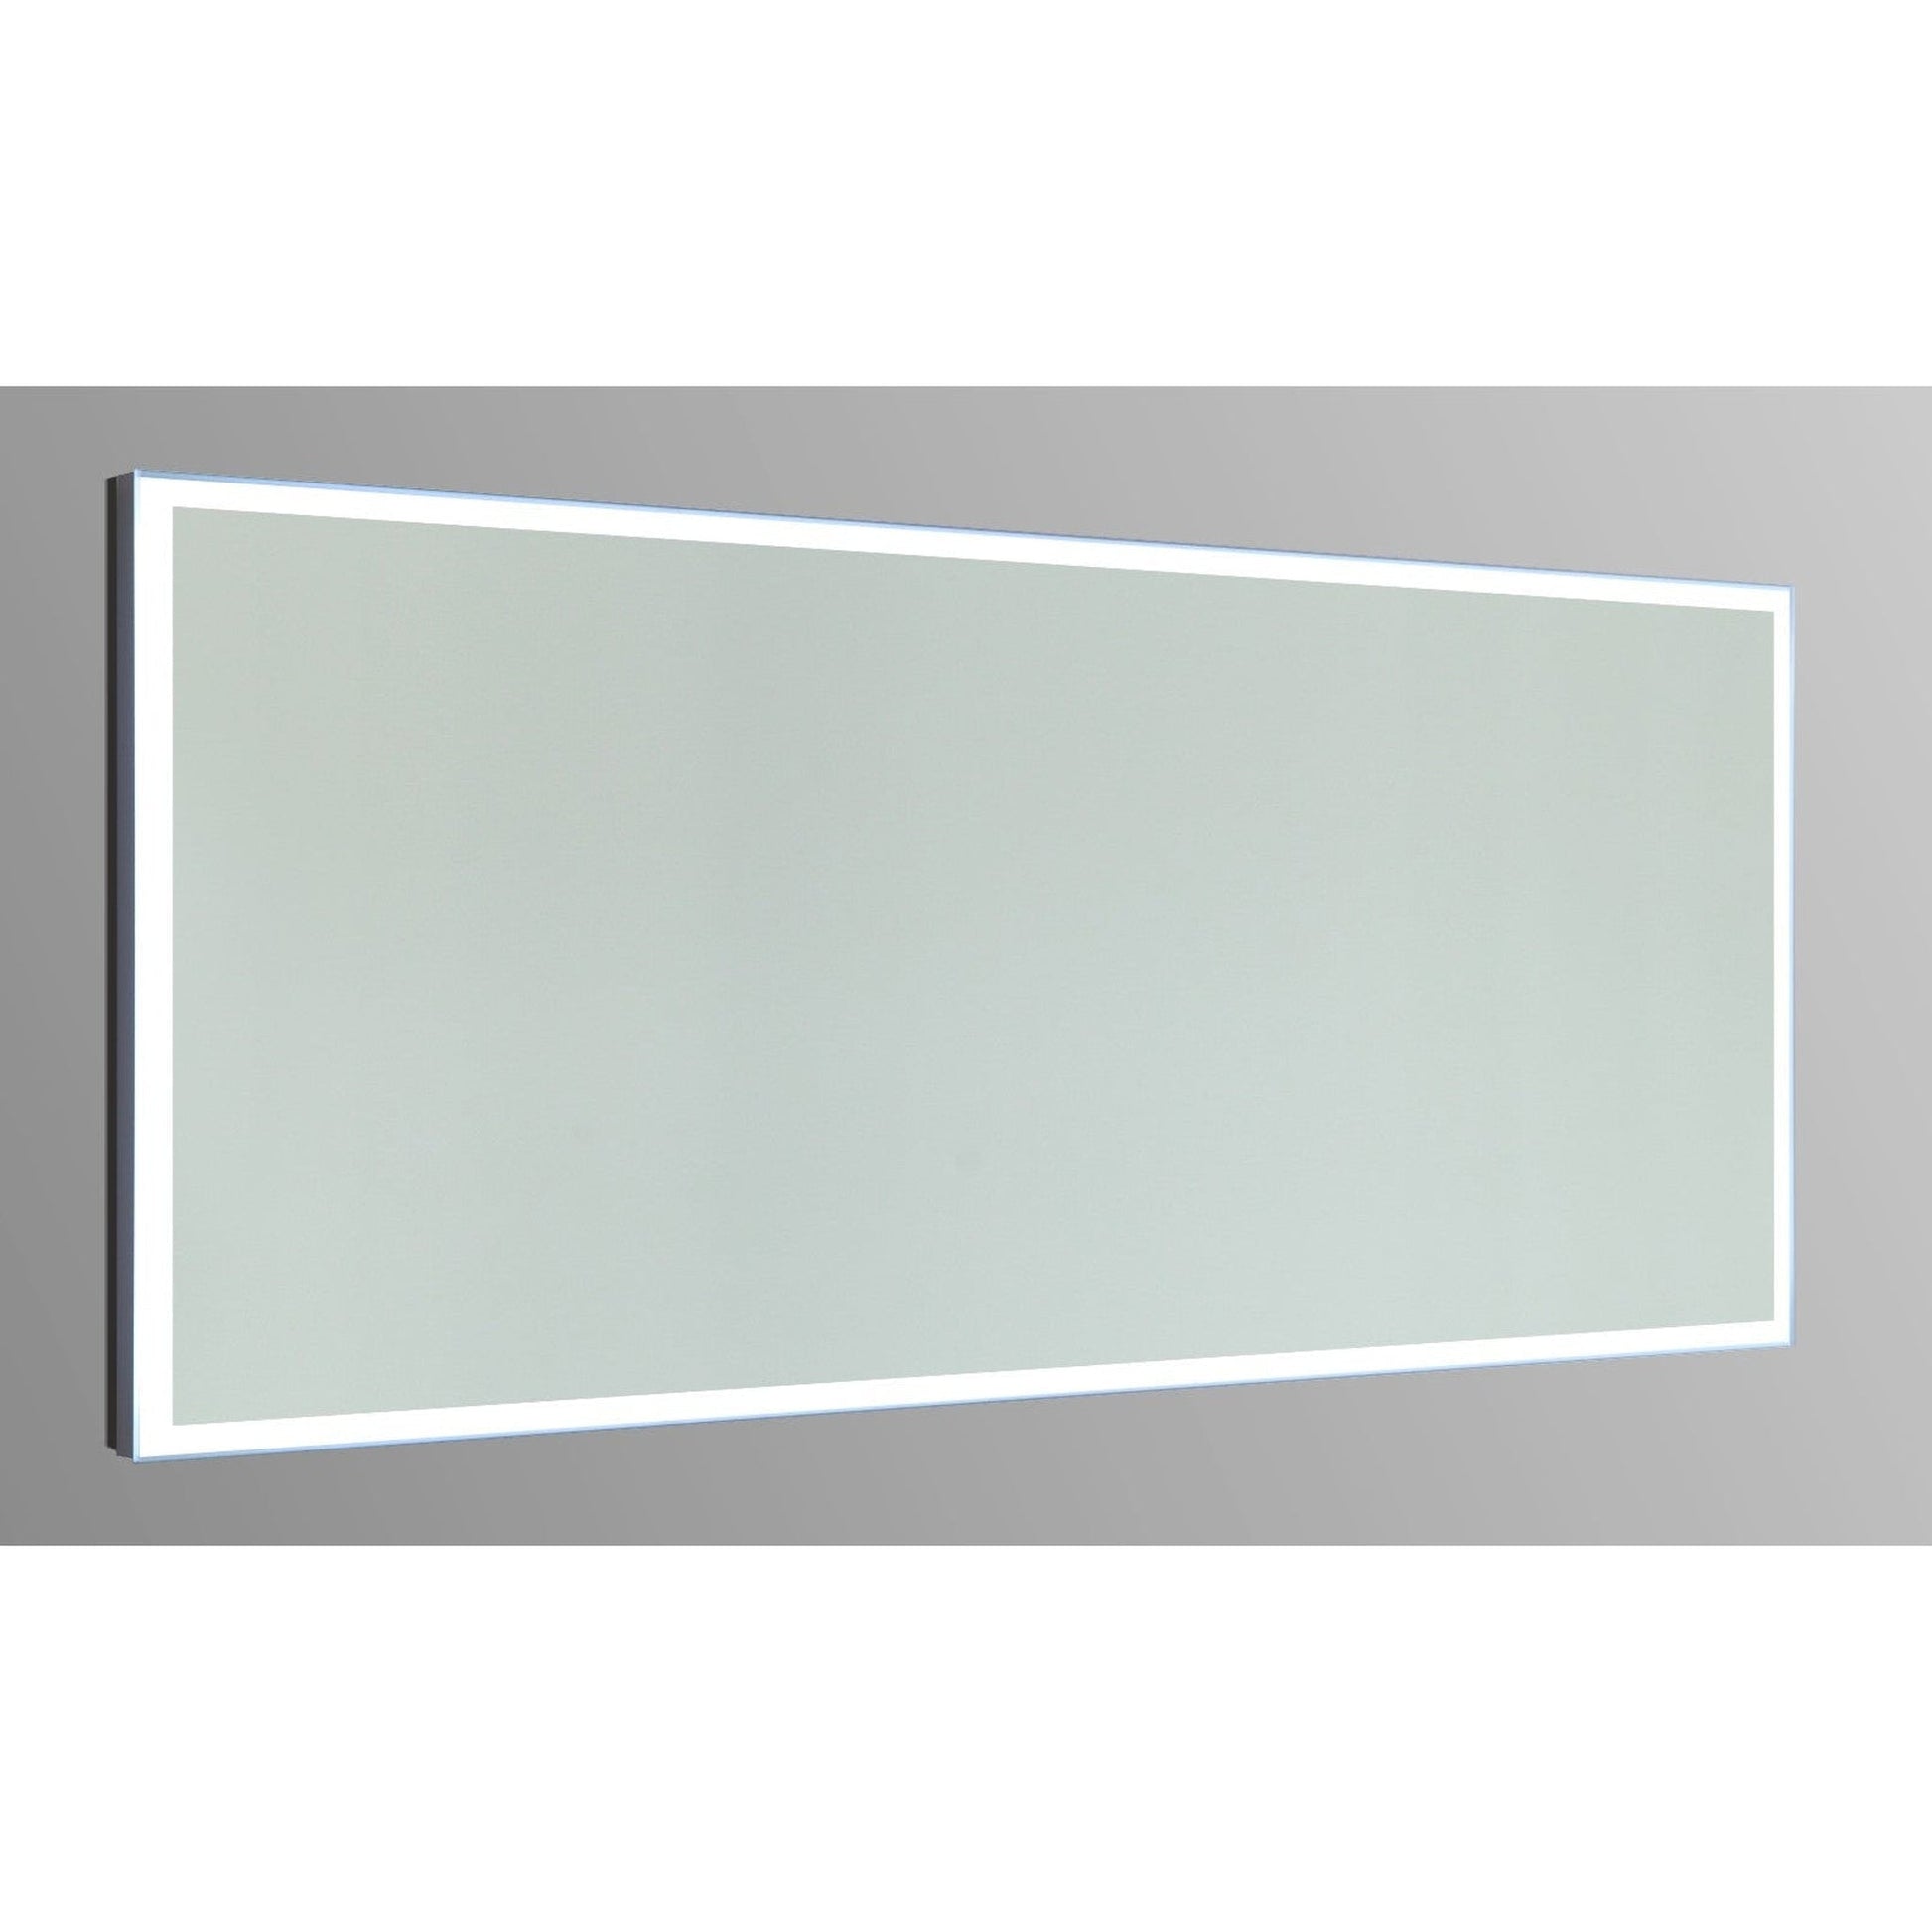 Vanity Art 60" W x 24" H Rectangular Frameless LED Lighted Illuminated Bathroom Vanity Wall Mirror With Touch Sensor Switch